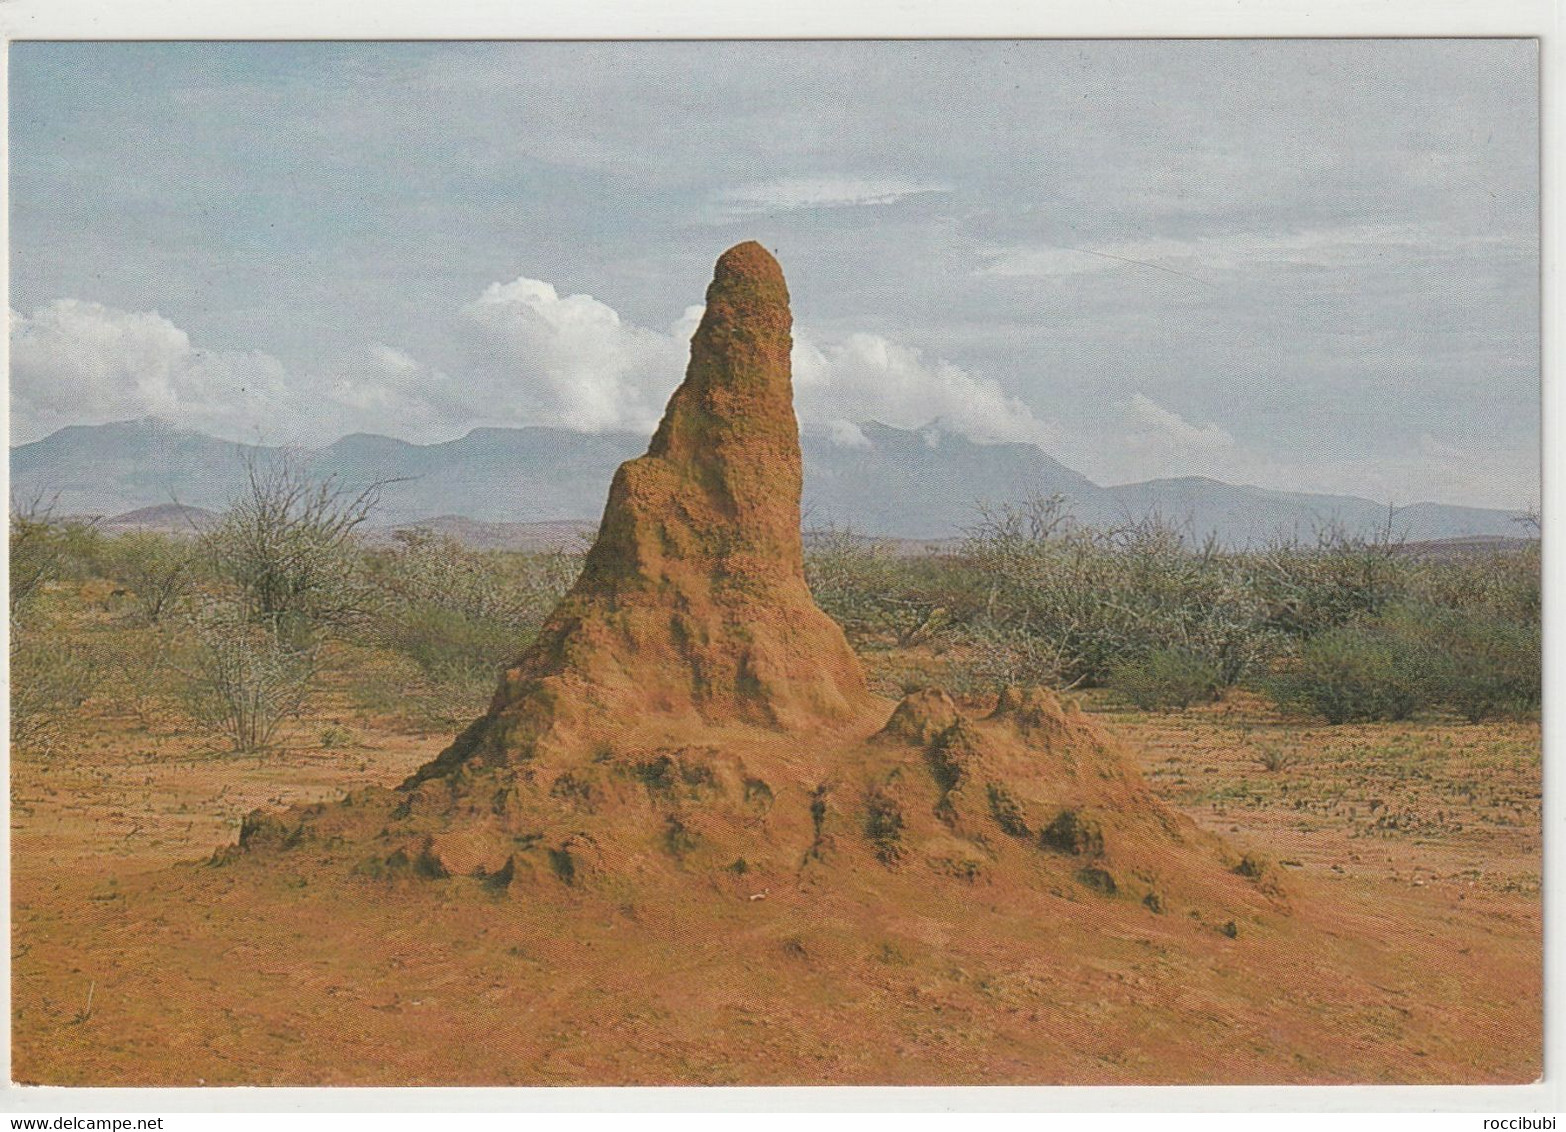 SWA, Termitenhügel - Namibia